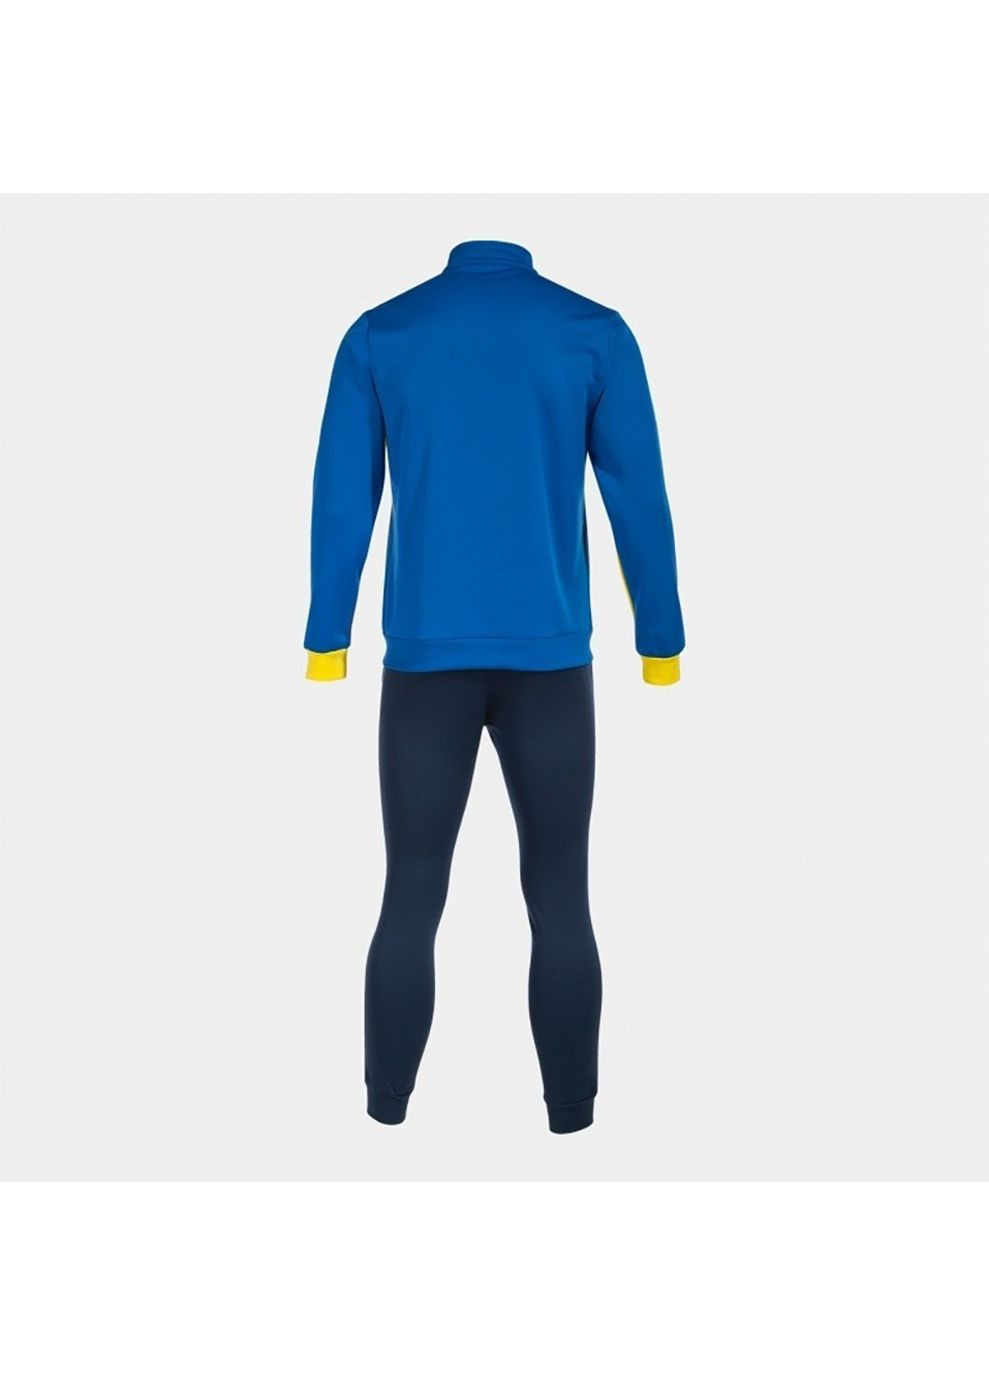 Спортивный костюм DERBY синий,голубой Joma (282617340)